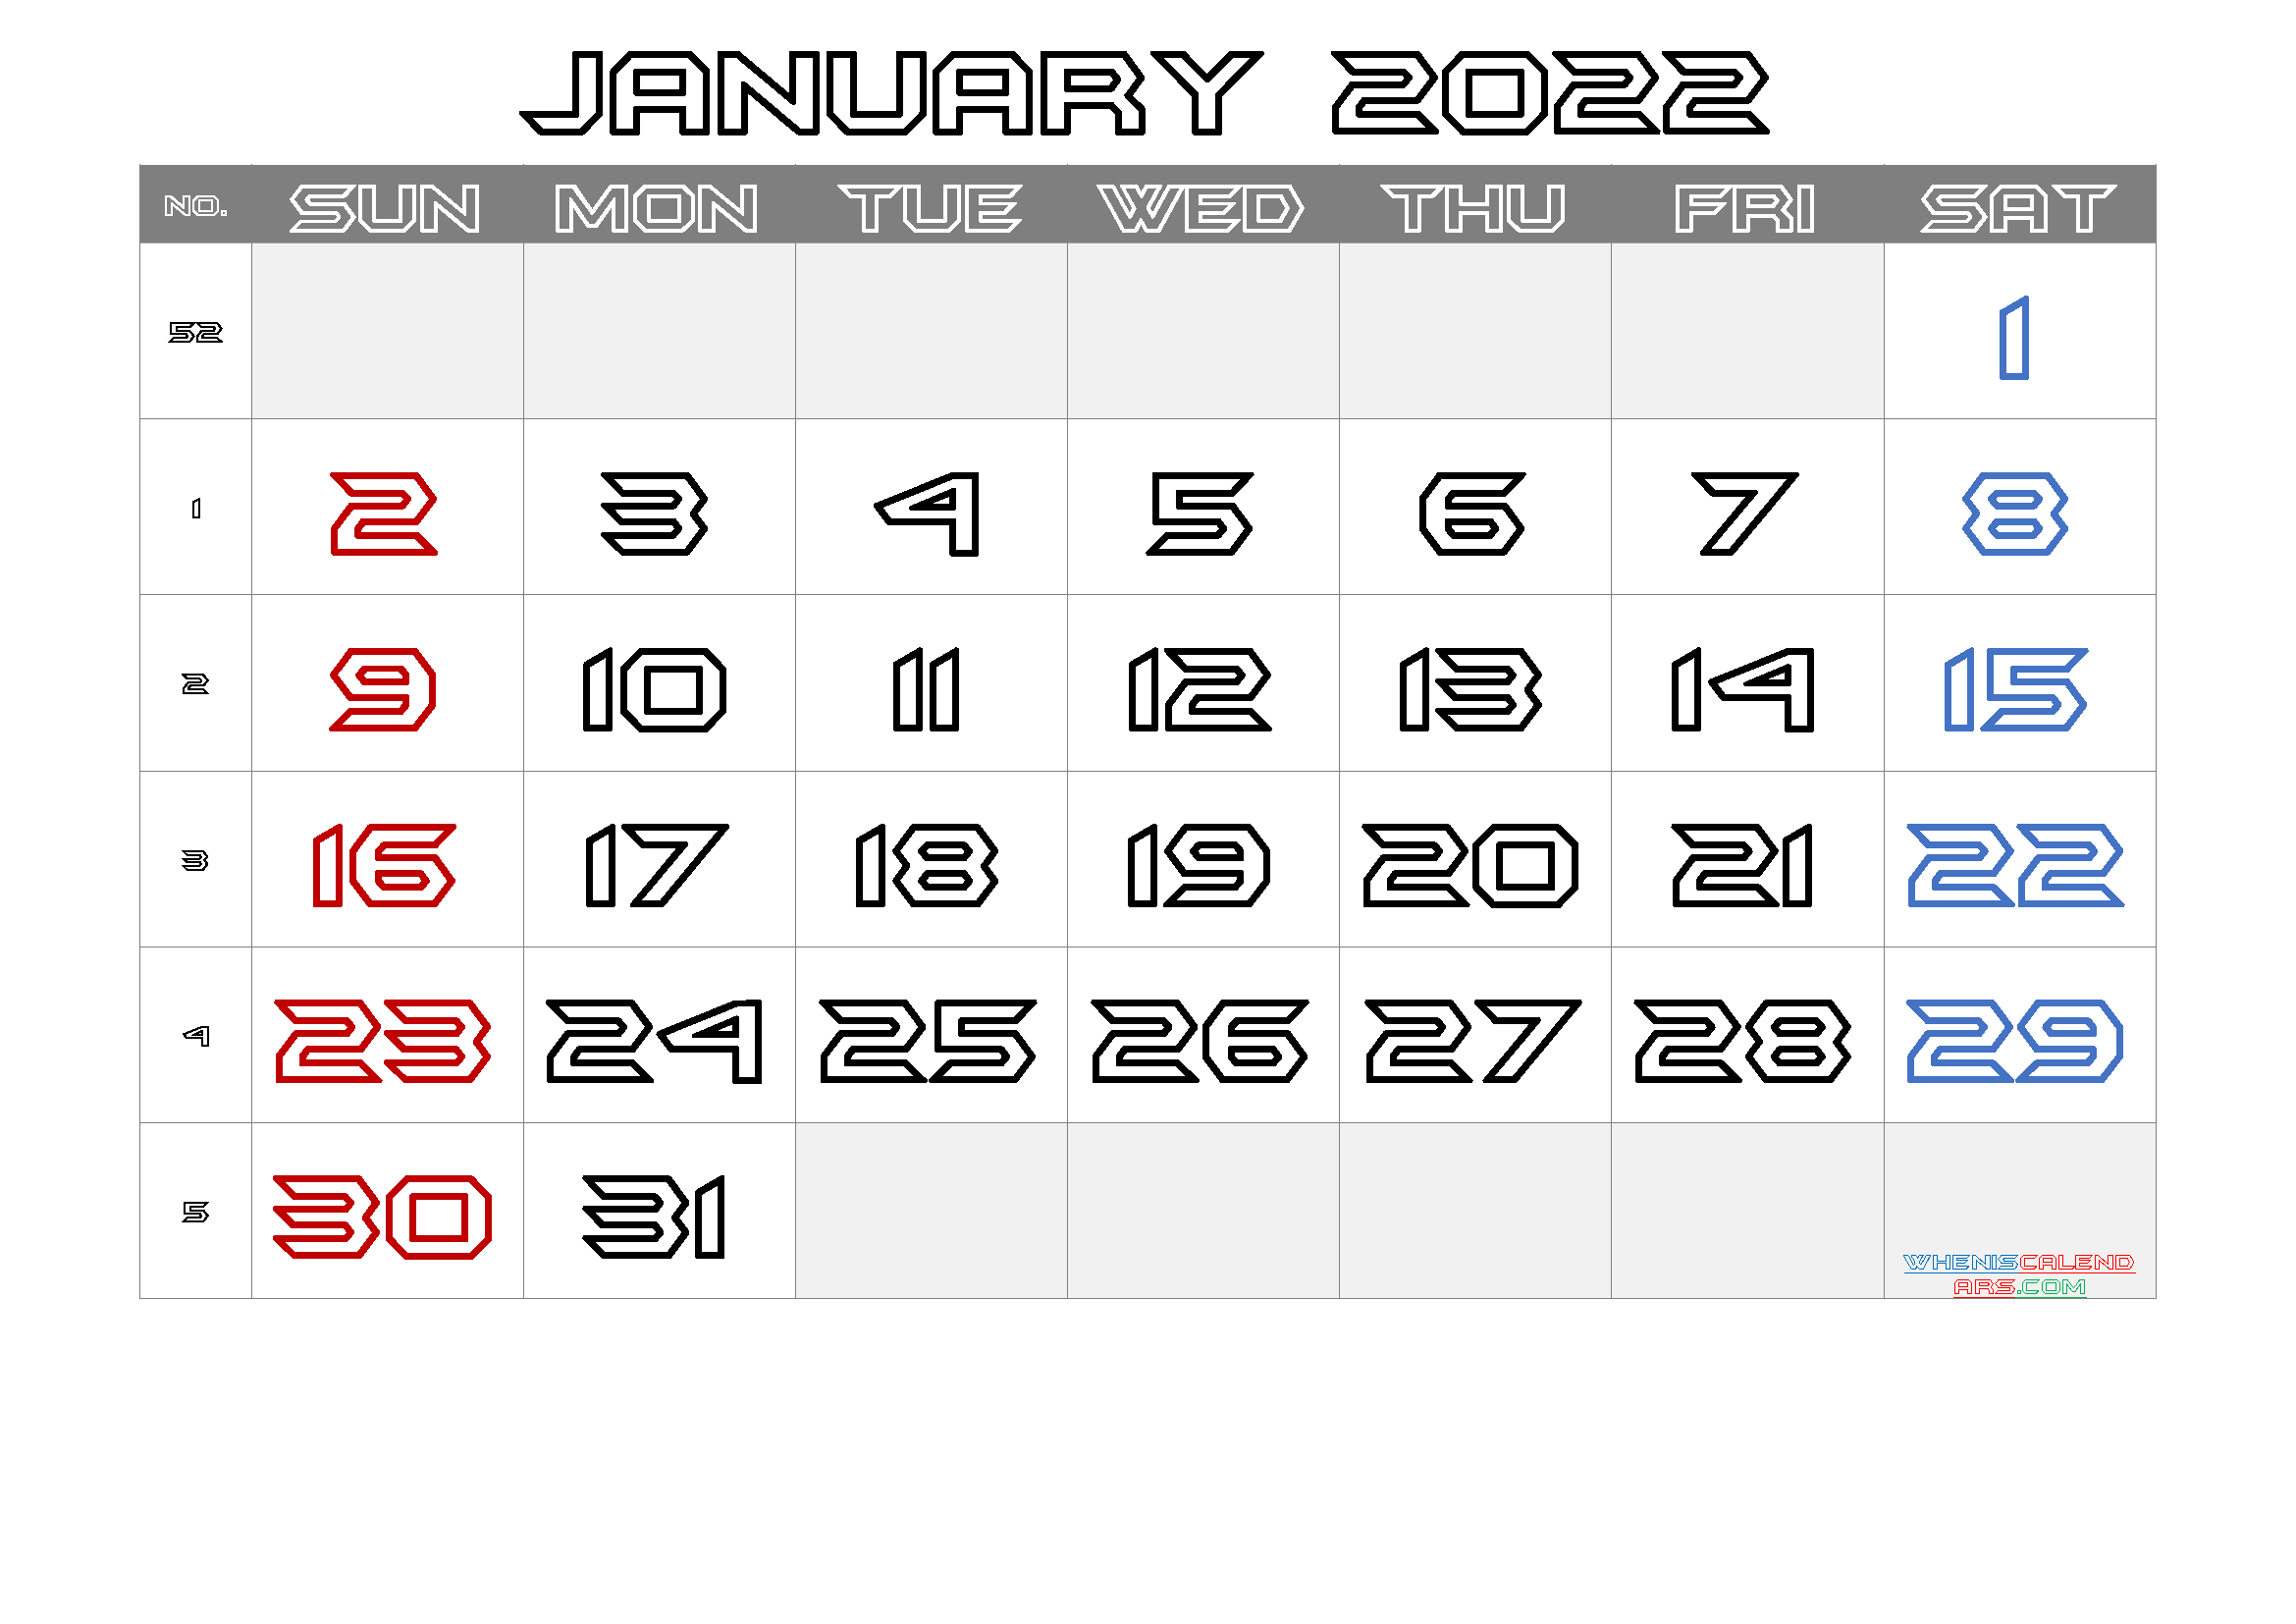 Free January 2022 Calendar with Holidays